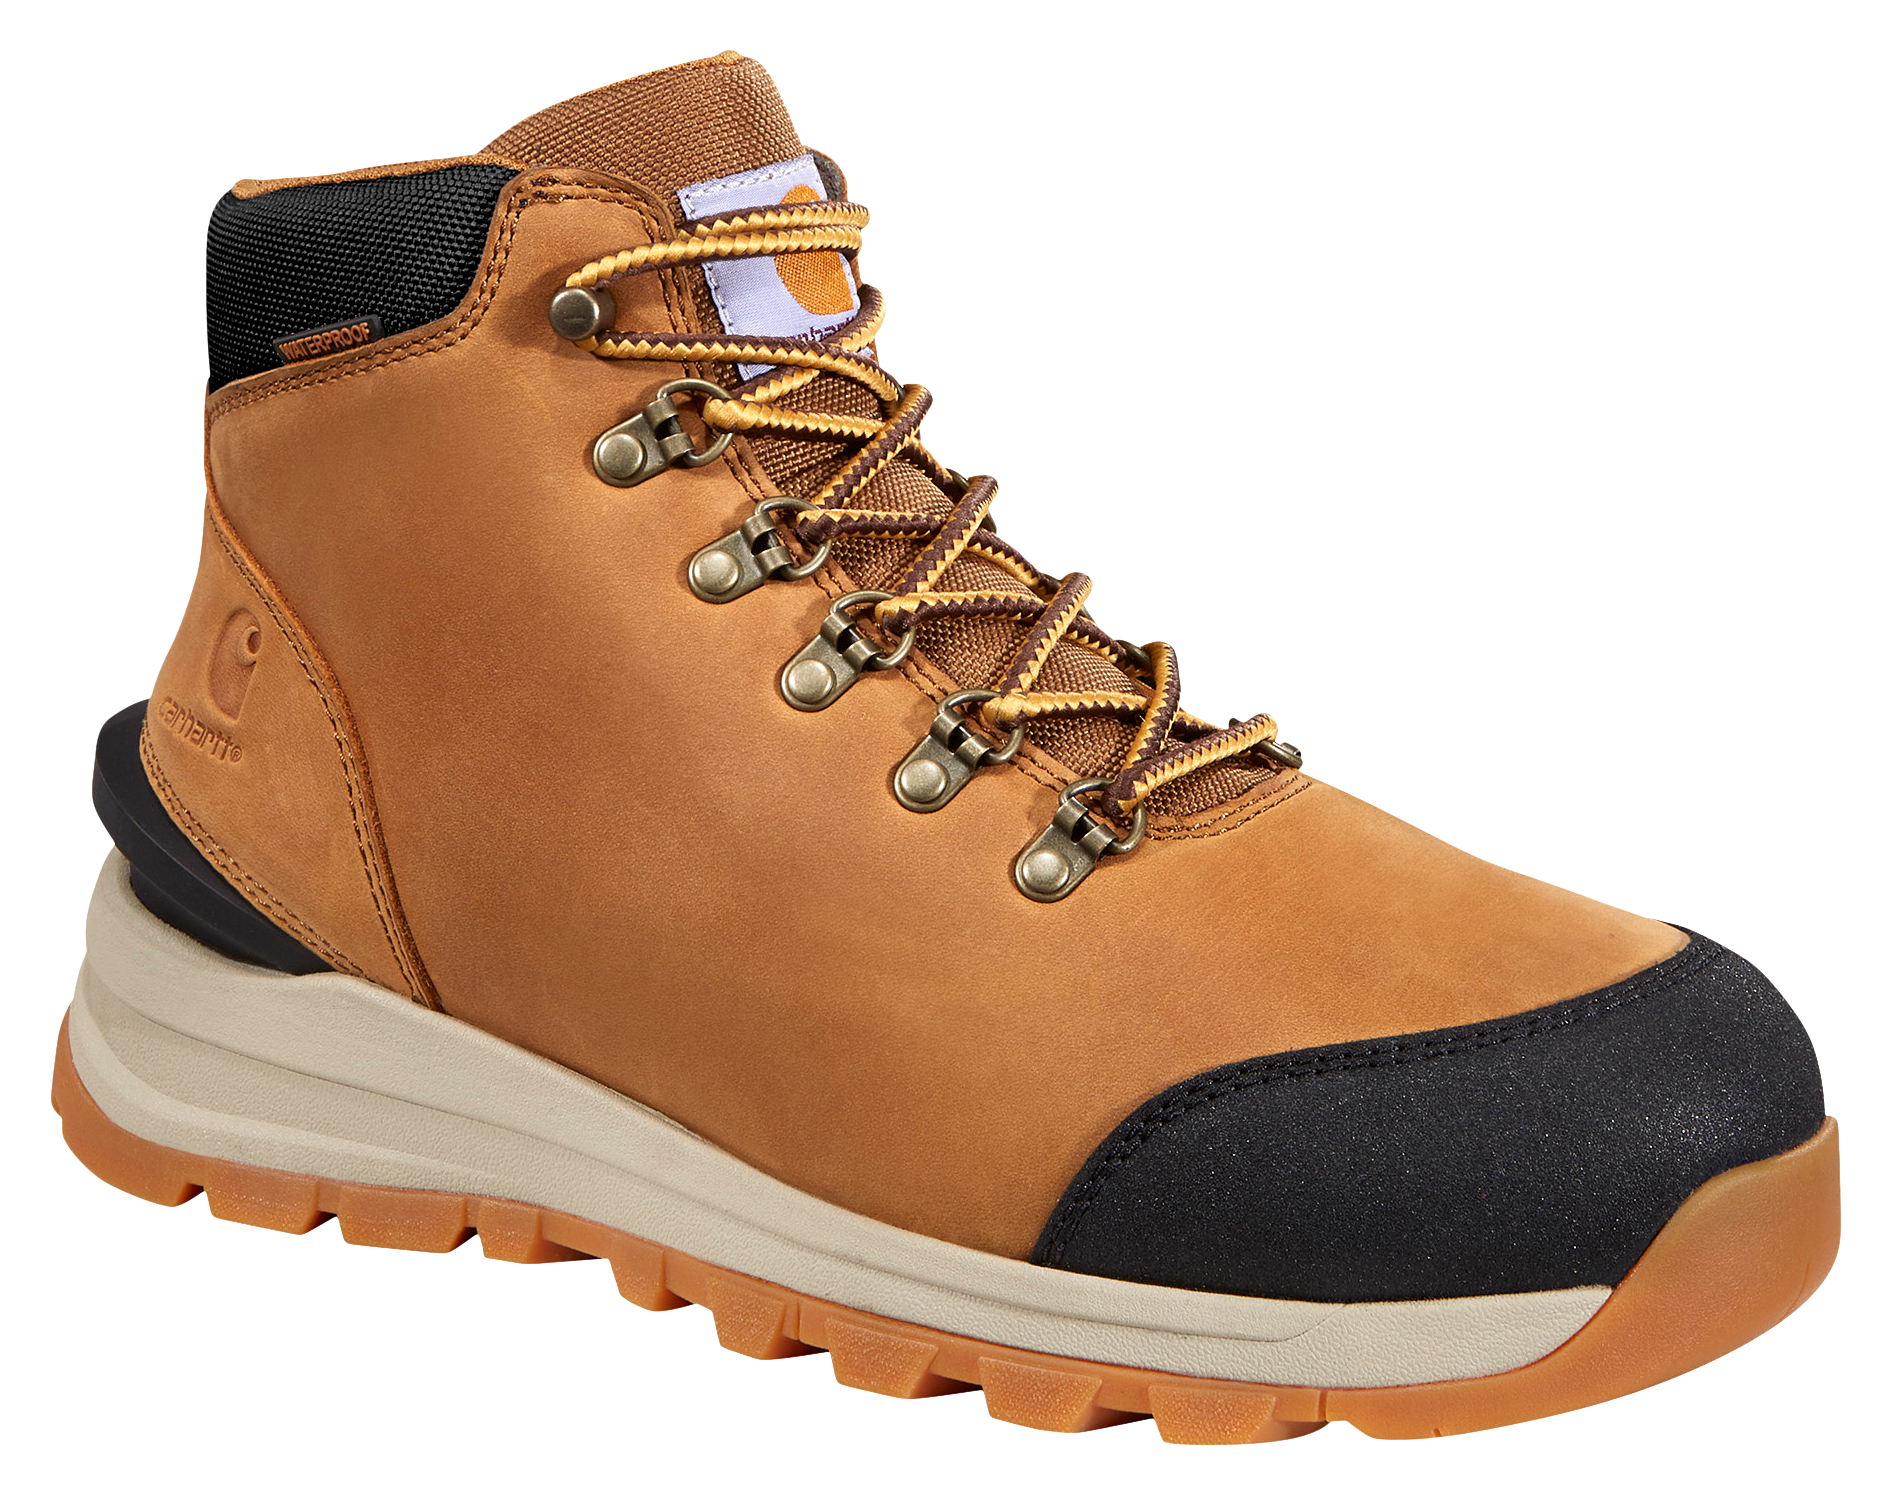 Carhartt Gilmore Waterproof Hiking Boots for Men - Brown - 9W